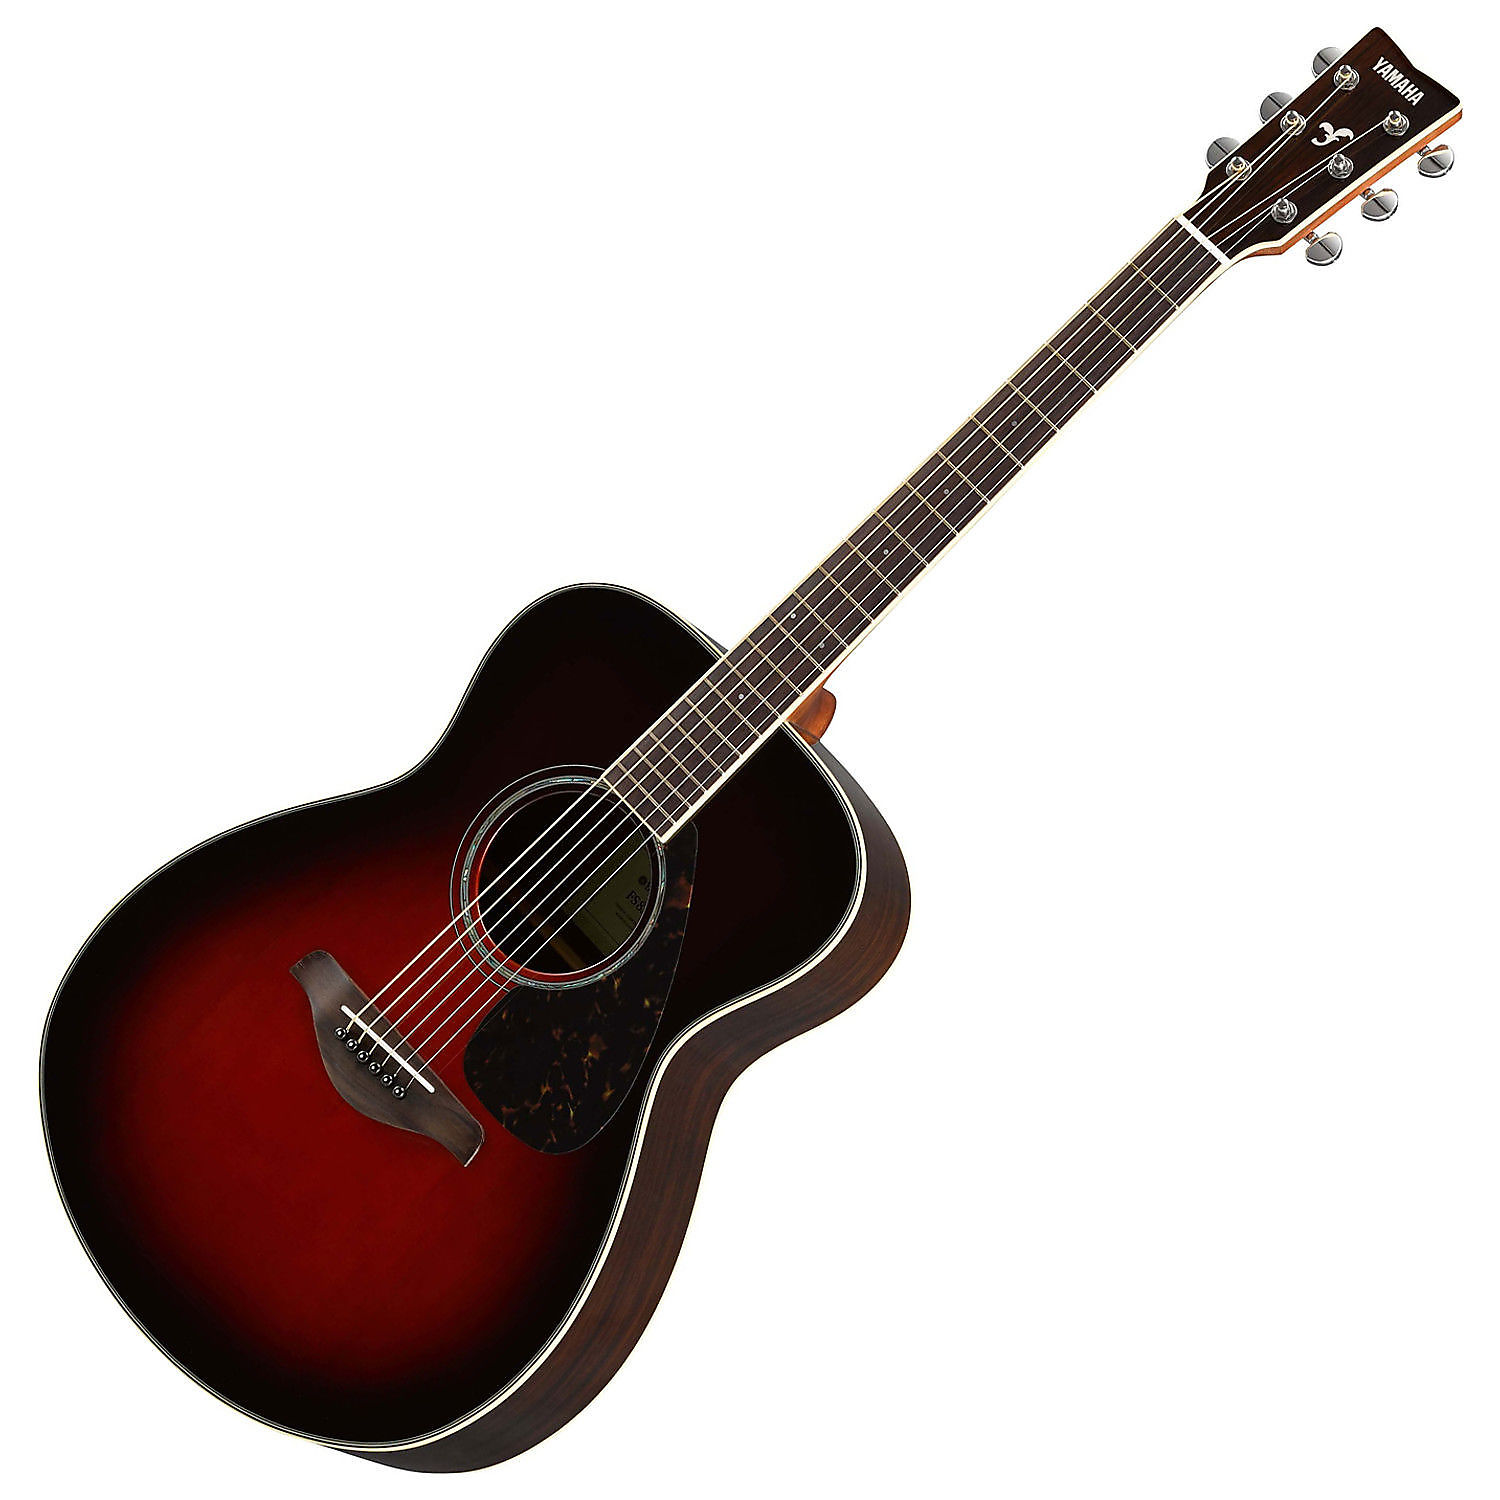 Yamaha FS830-TBS Small-Body Acoustic Guitar Tobacco Brown Sunburst | Reverb